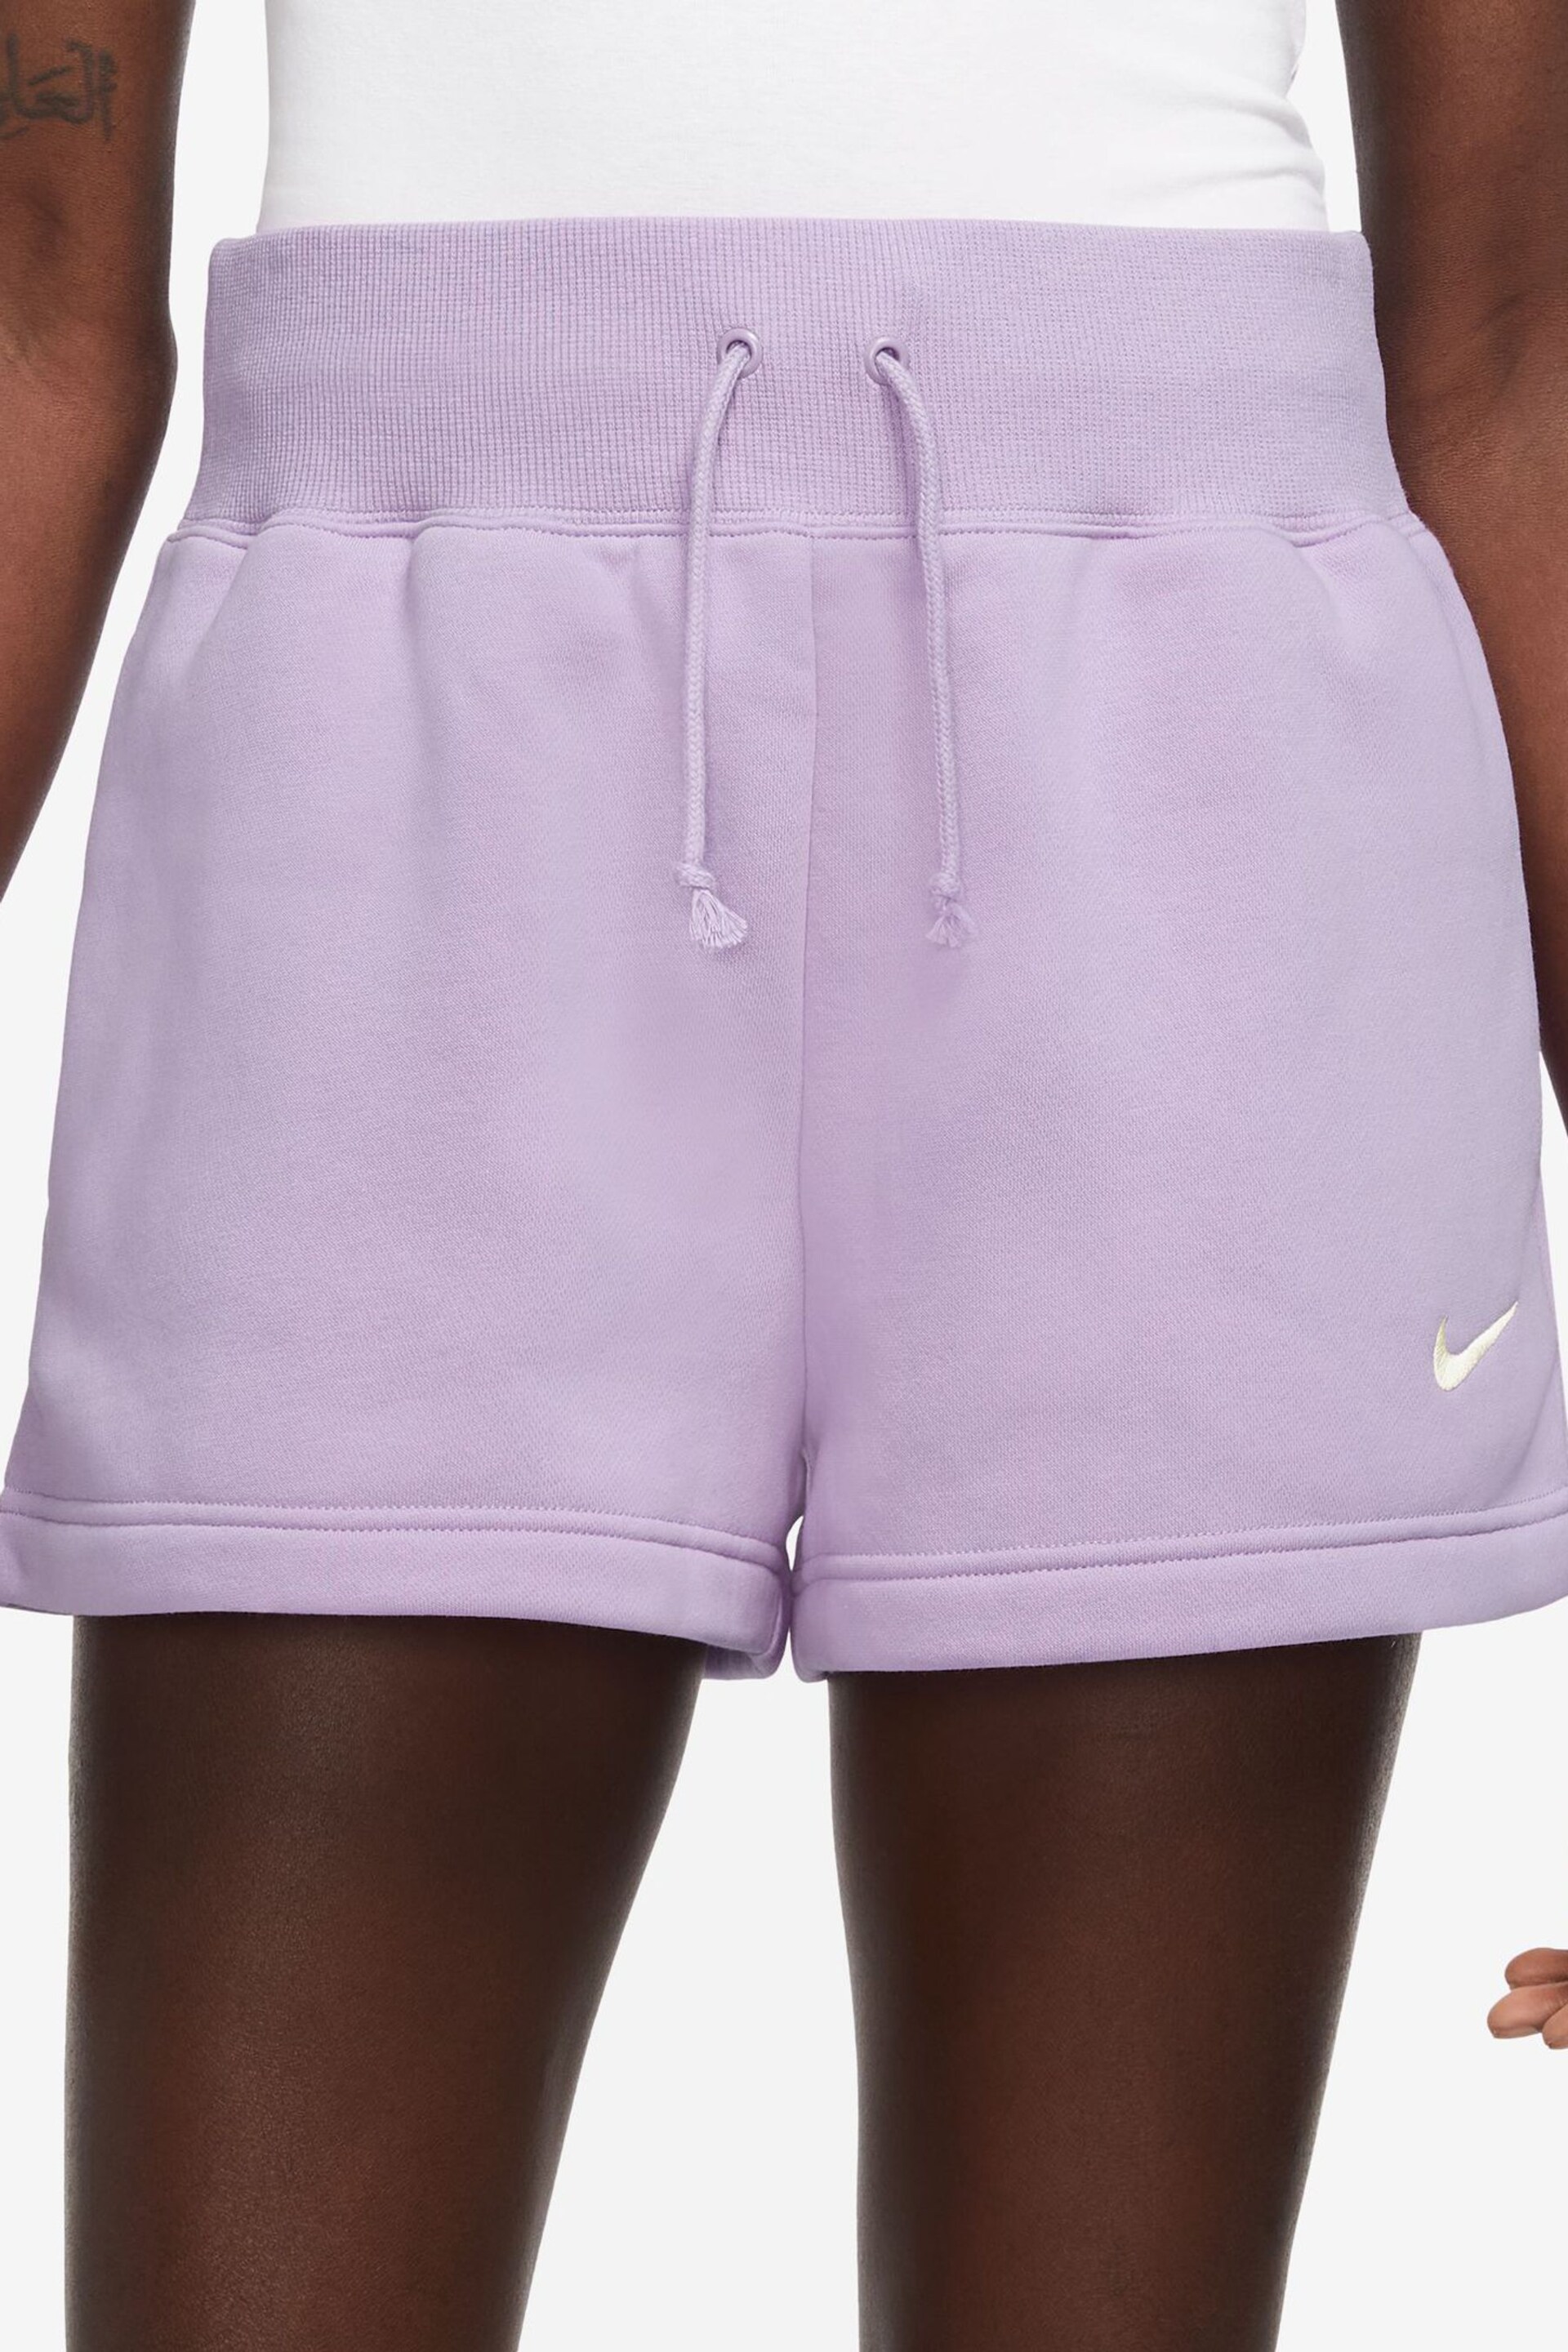 Nike Lilac Purple Phoenix Fleece High Waisted Shorts - Image 1 of 4